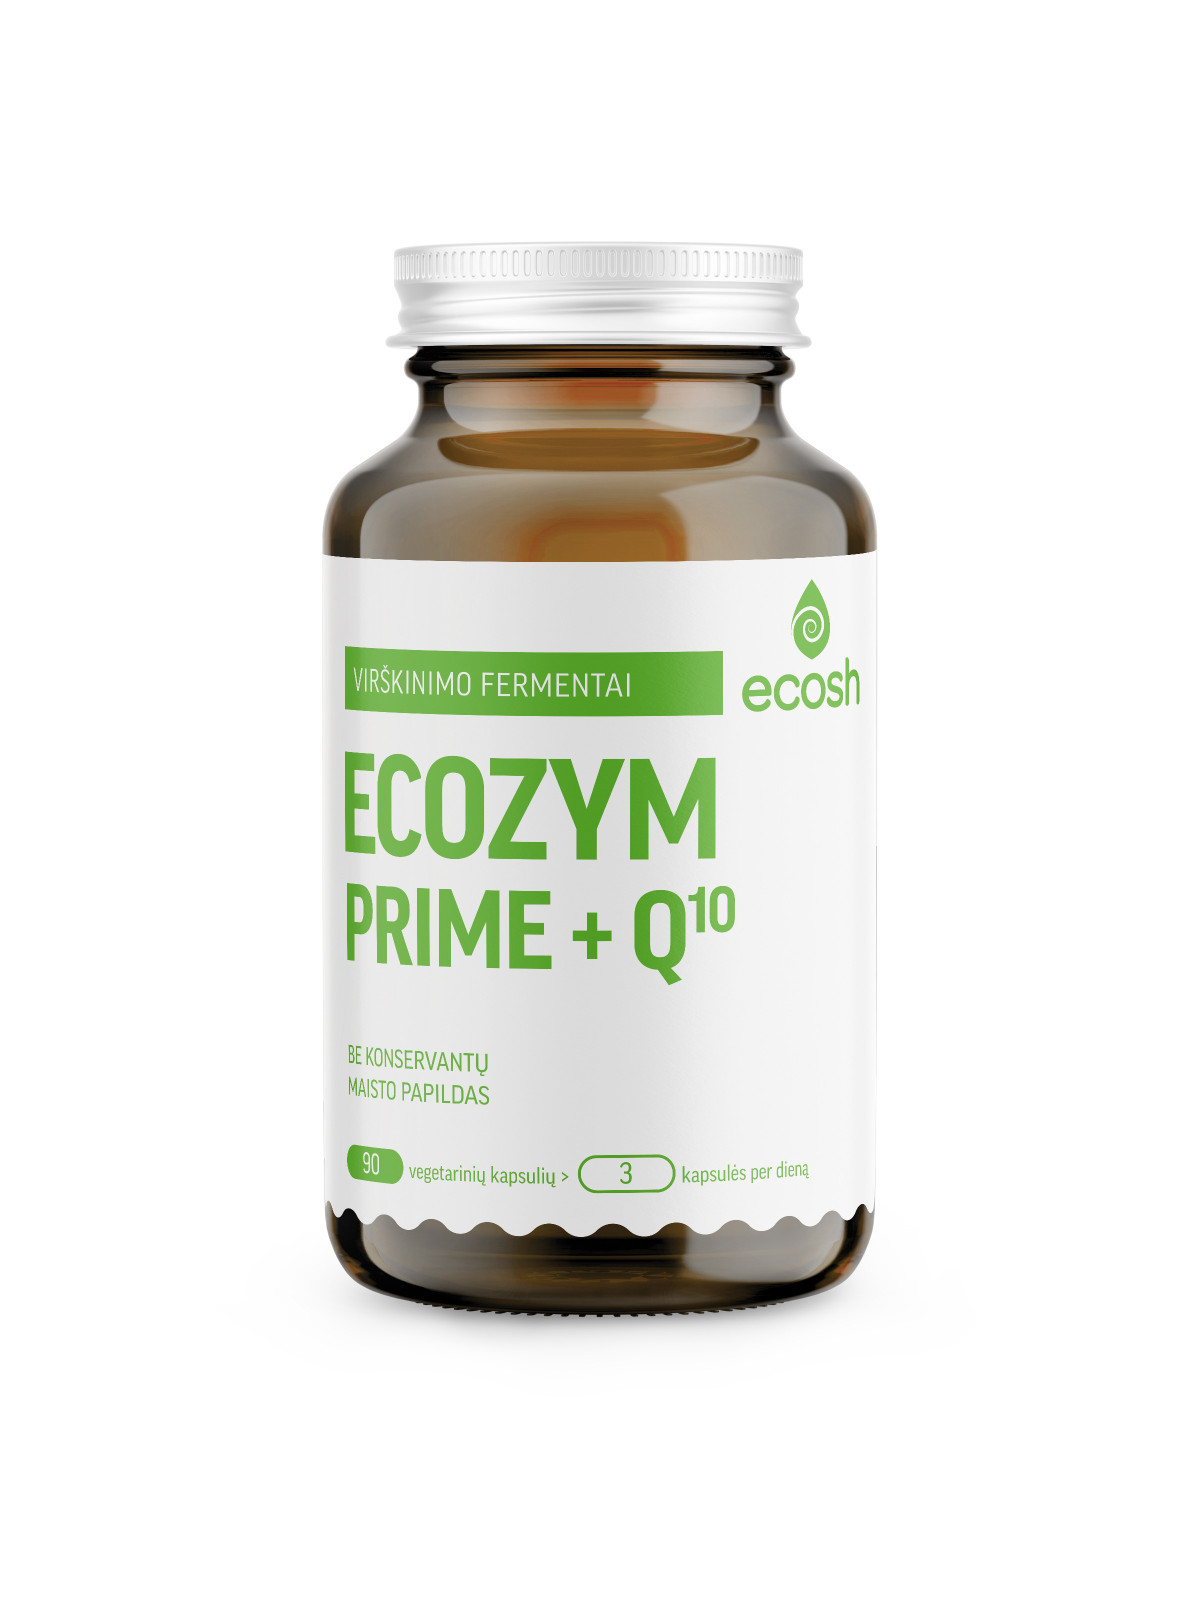 Maisto papildas Ecozym Prime + kofermentas Q10 ECOSH 90kaps.